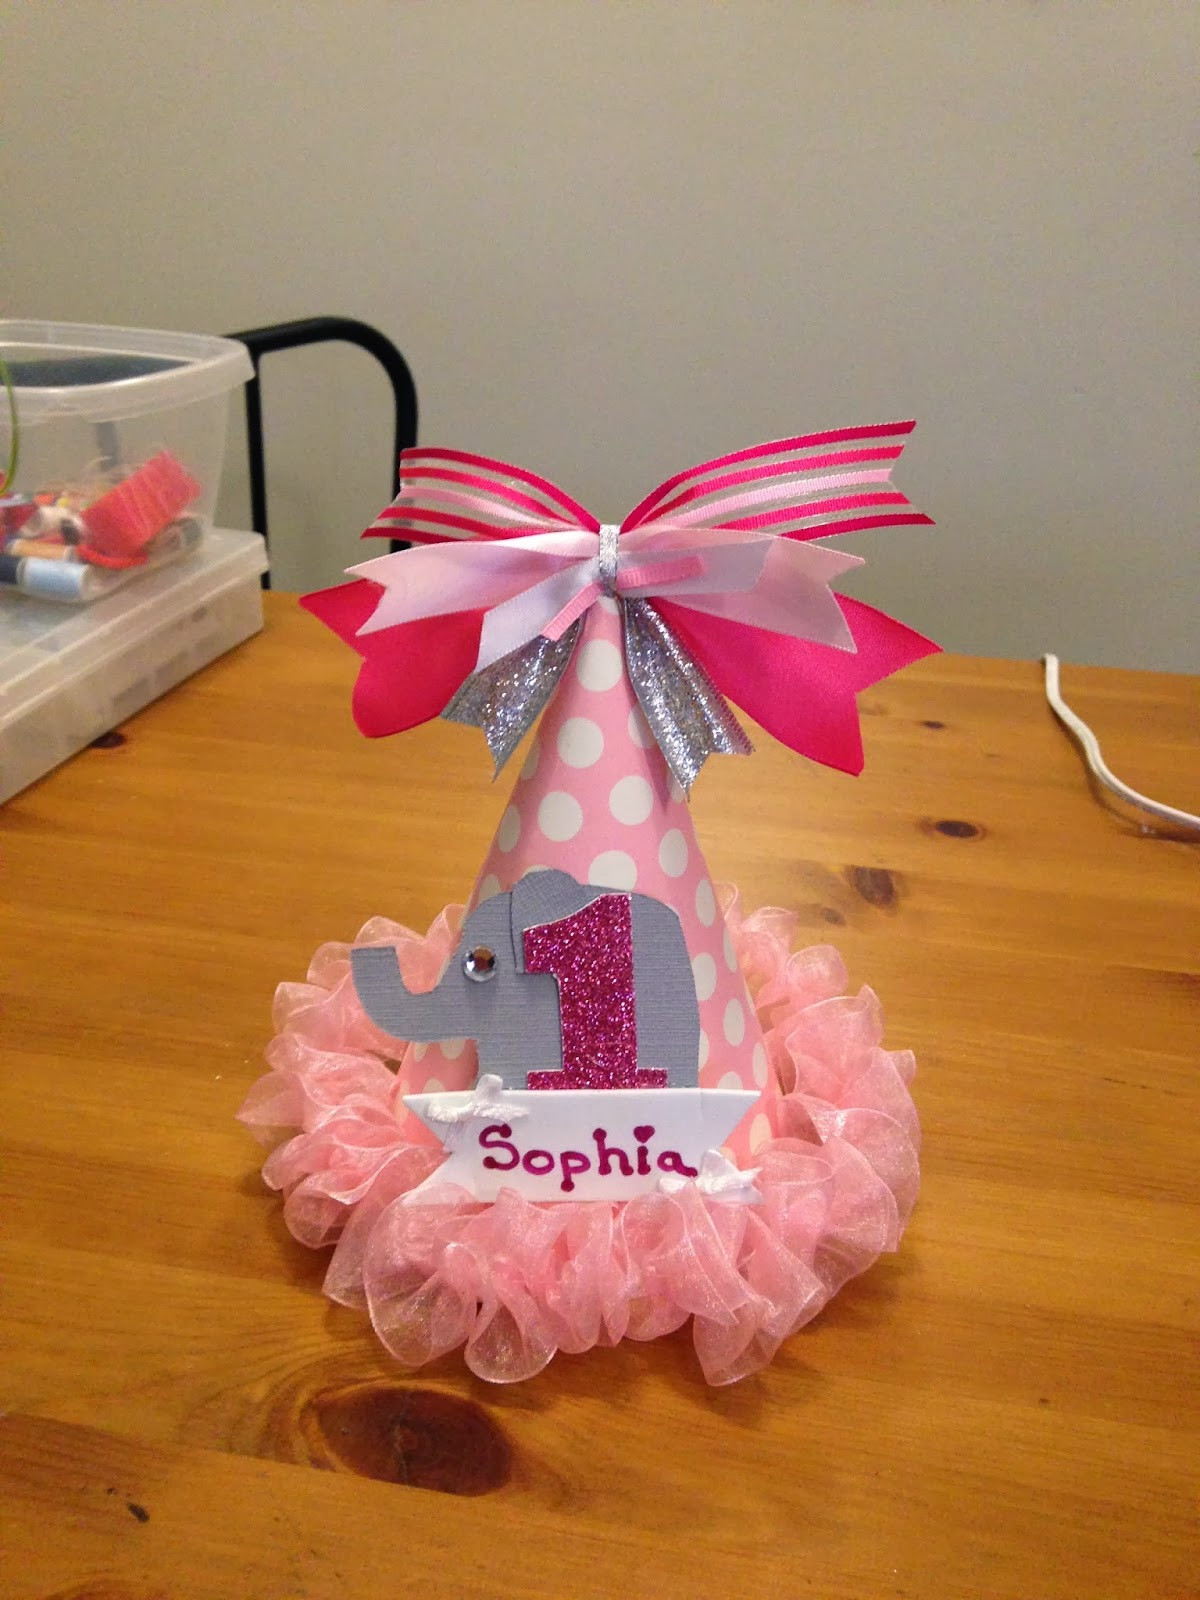 Diy First Birthday Decorations
 The Crafty Mom Pink Elephant 1st Birthday Party Theme DIY